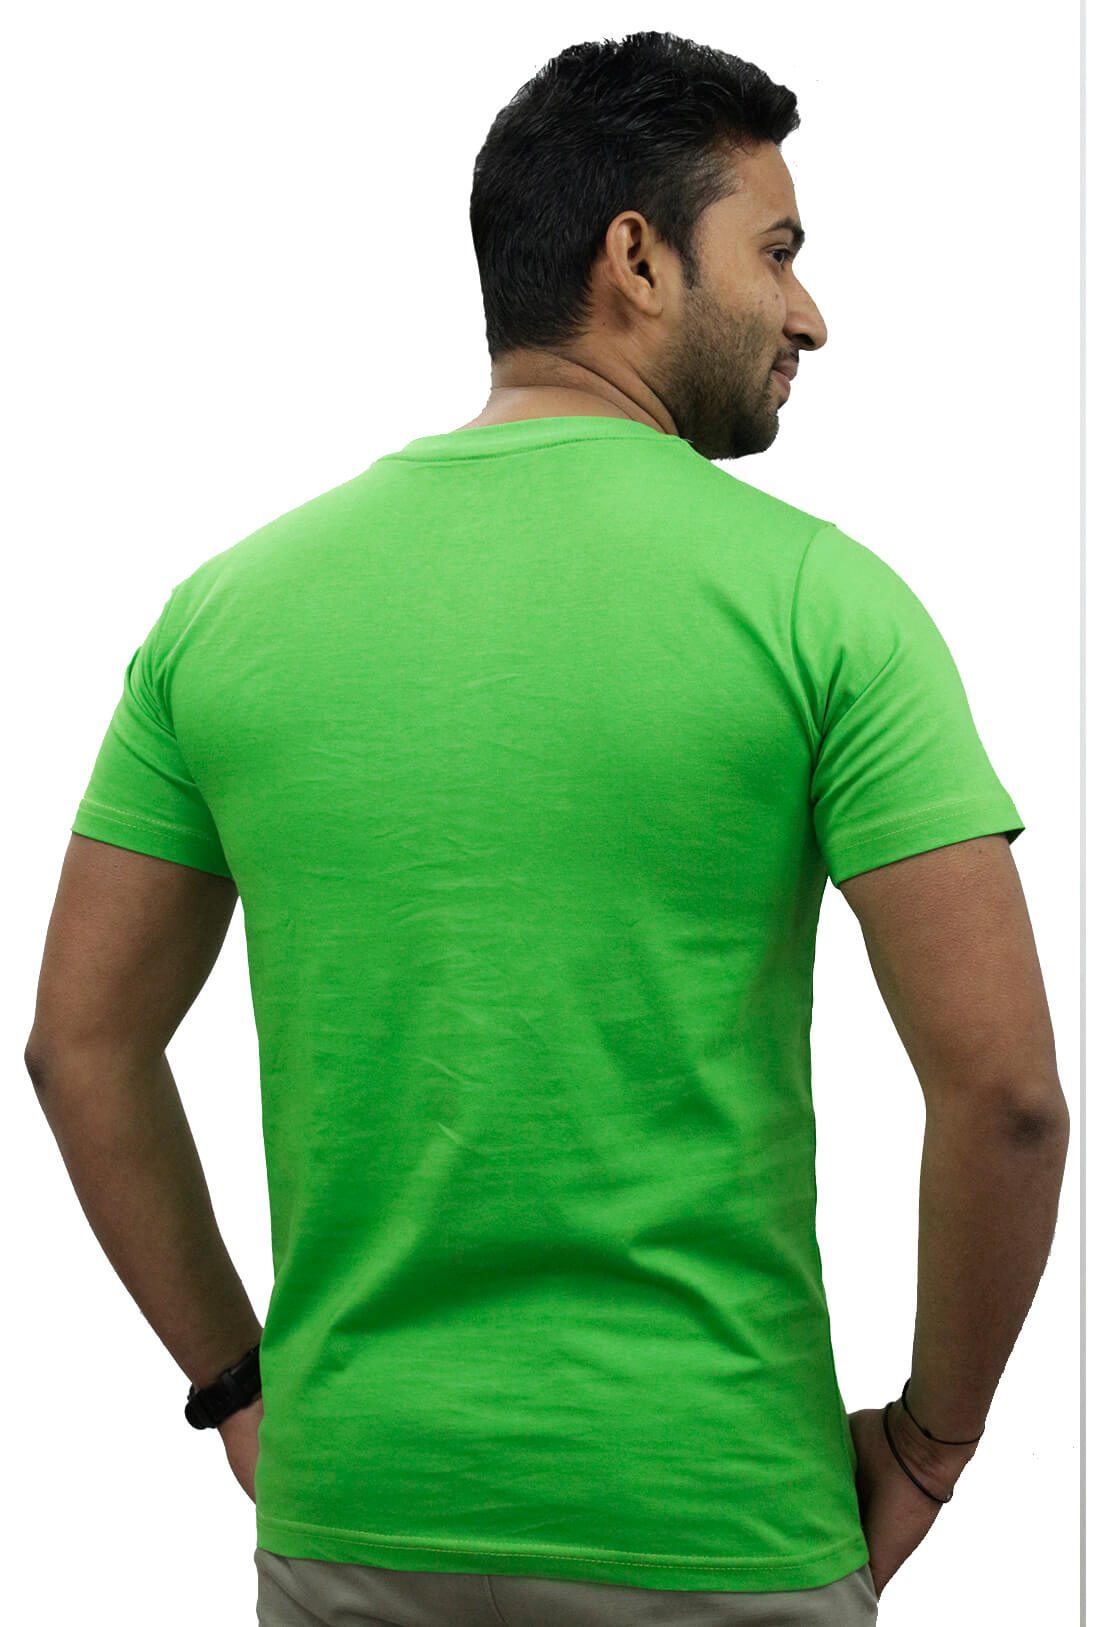 Men's Plain Kelly Green Cotton T-Shirt